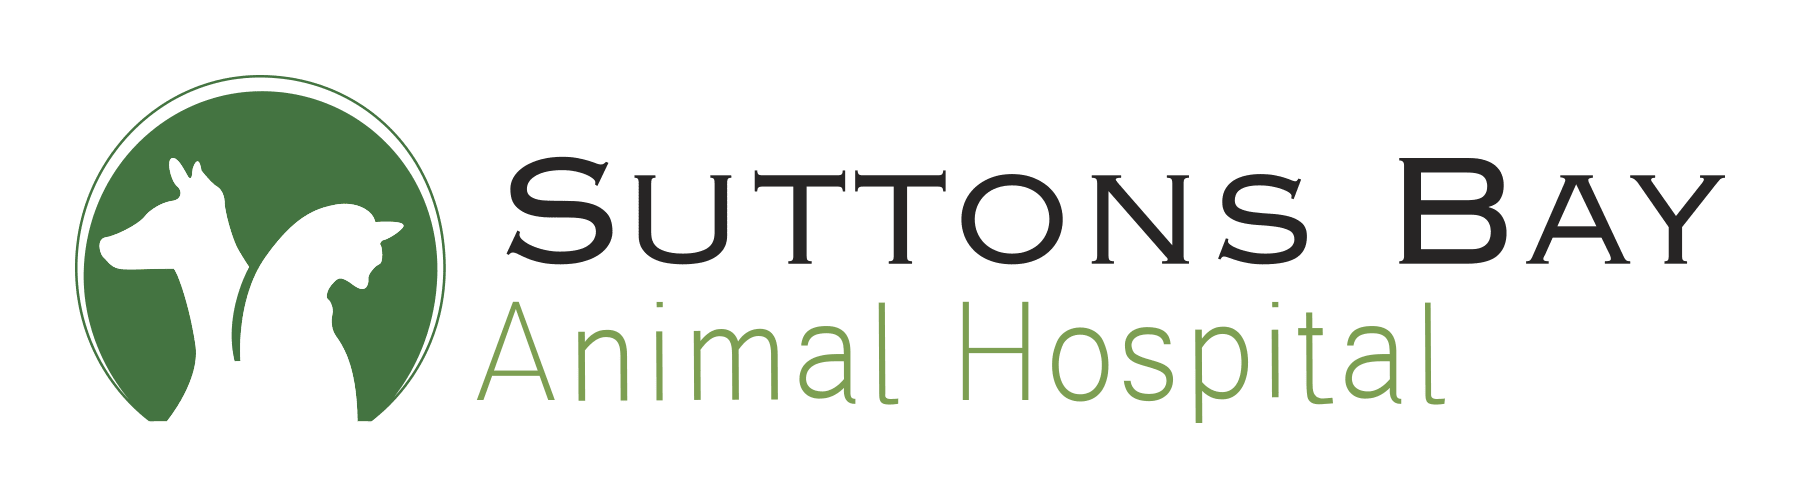 Suttons_Bay_Animal_Hospital-MI030-LOGO-horizontal.png